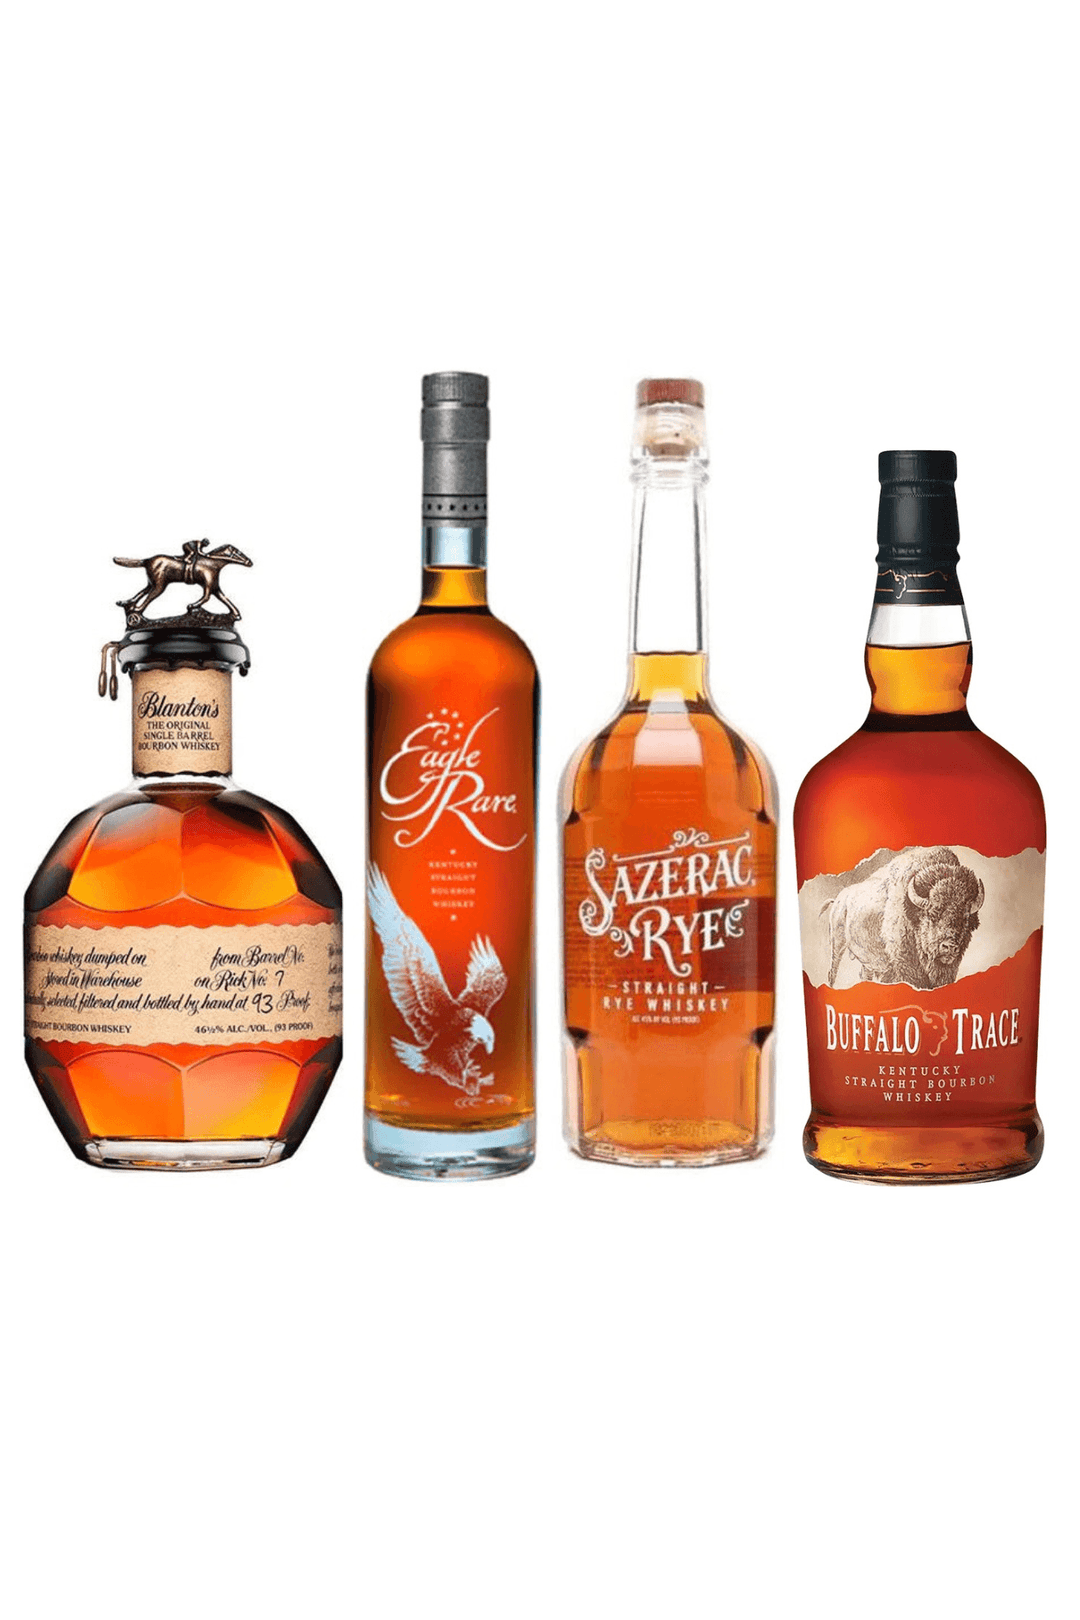 Blanton's Original Single Barrel Bourbon & Eagle Rare Bourbon & Sazerac Rye & Buffalo Trace Whiskey Bundle - Liquor Luxe